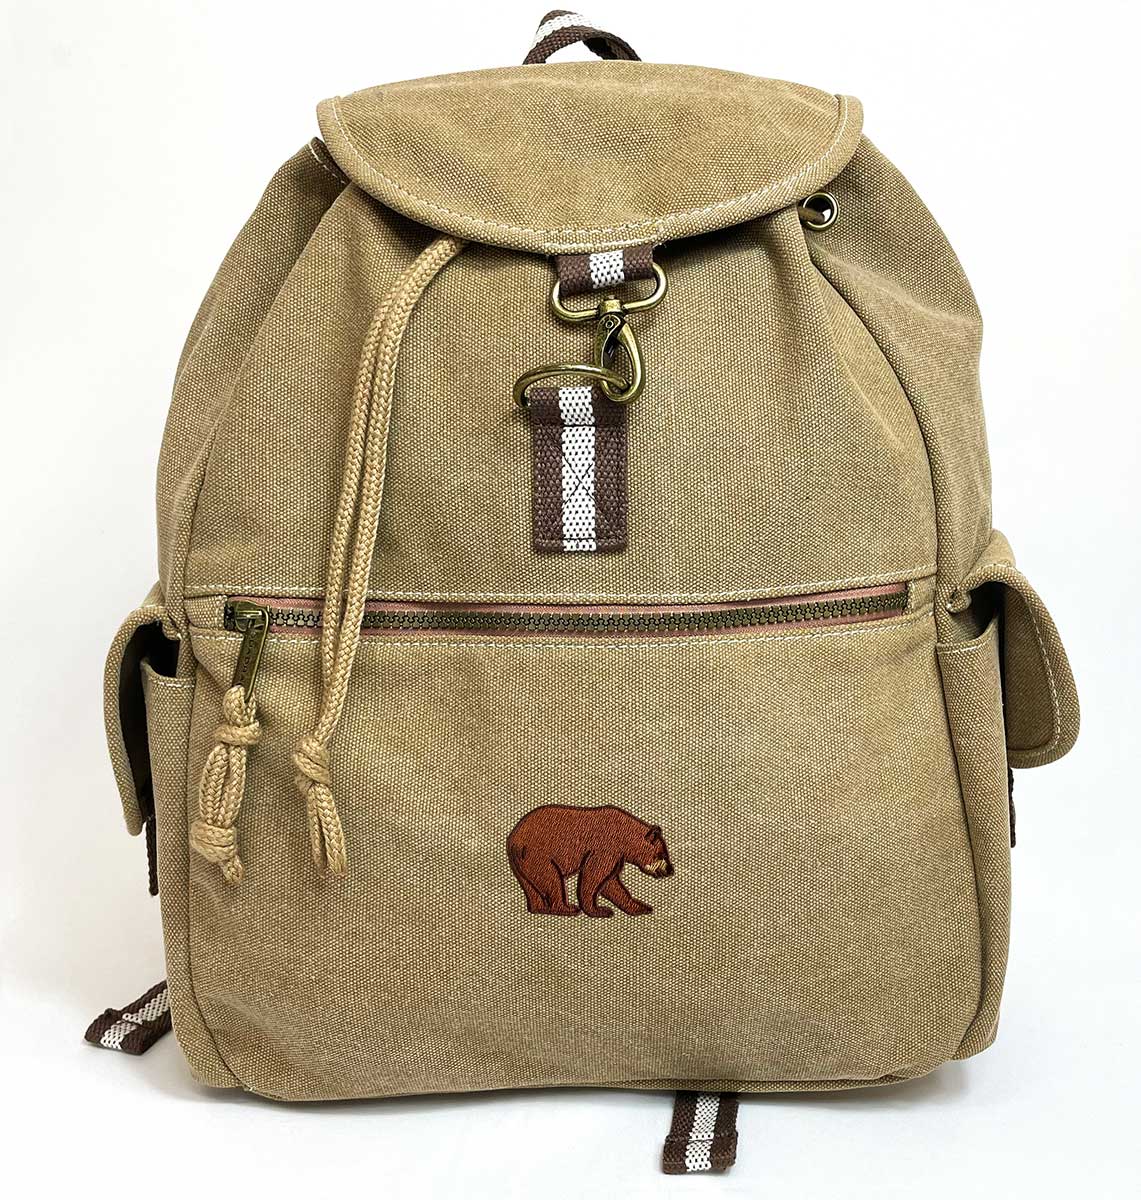 Bear Vintage Canvas Backpack - Blue Panda